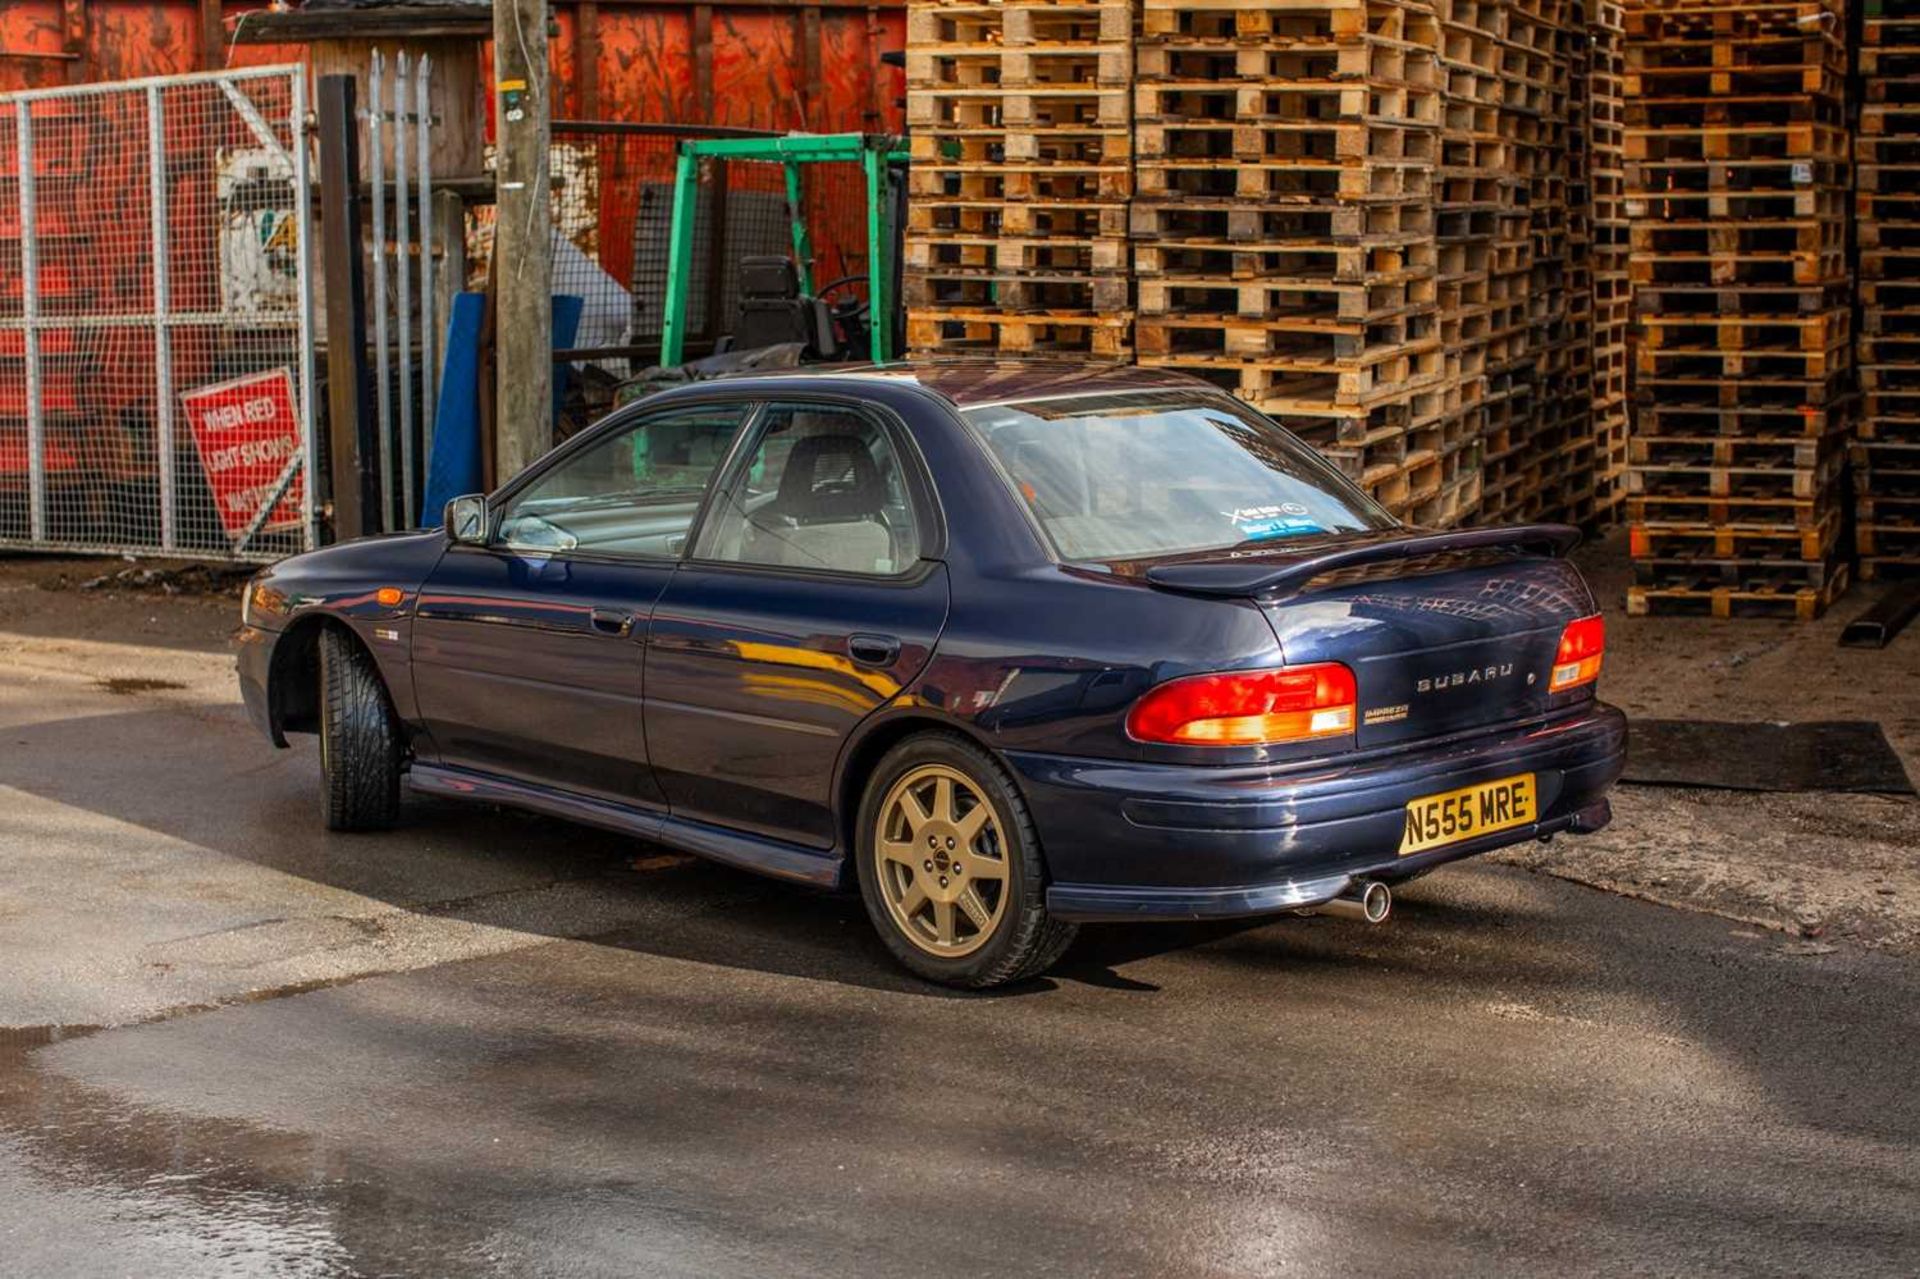 1995 Subaru Impreza Series McRae ***NO RESERVE*** Number 005 of 200 examples prepared by Prodrive - Image 16 of 118